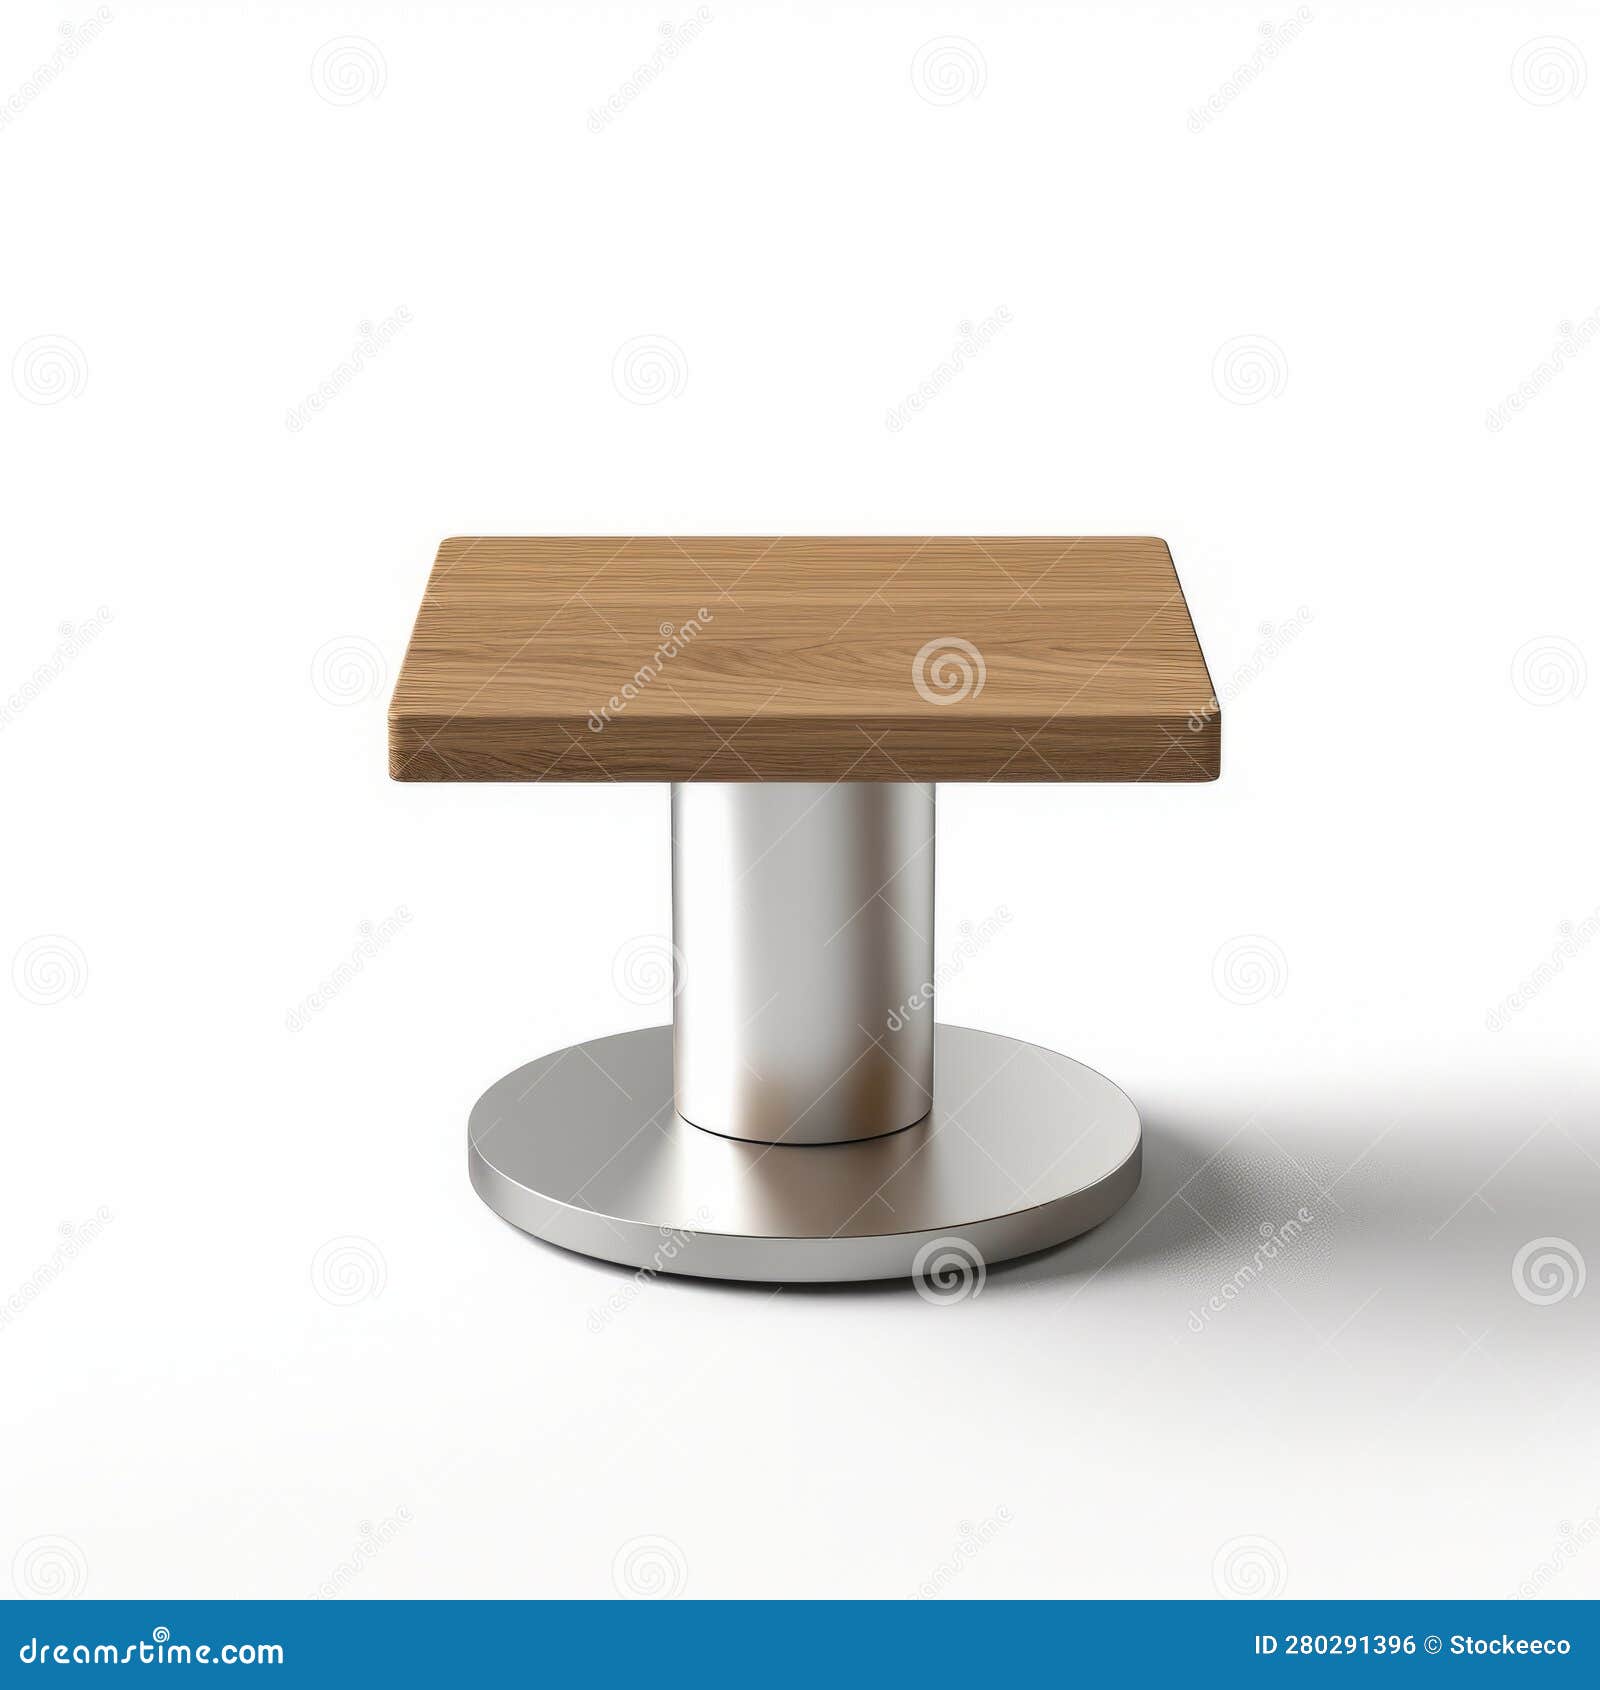 wooden desk on white pedestal: metallic rotation incisioni series